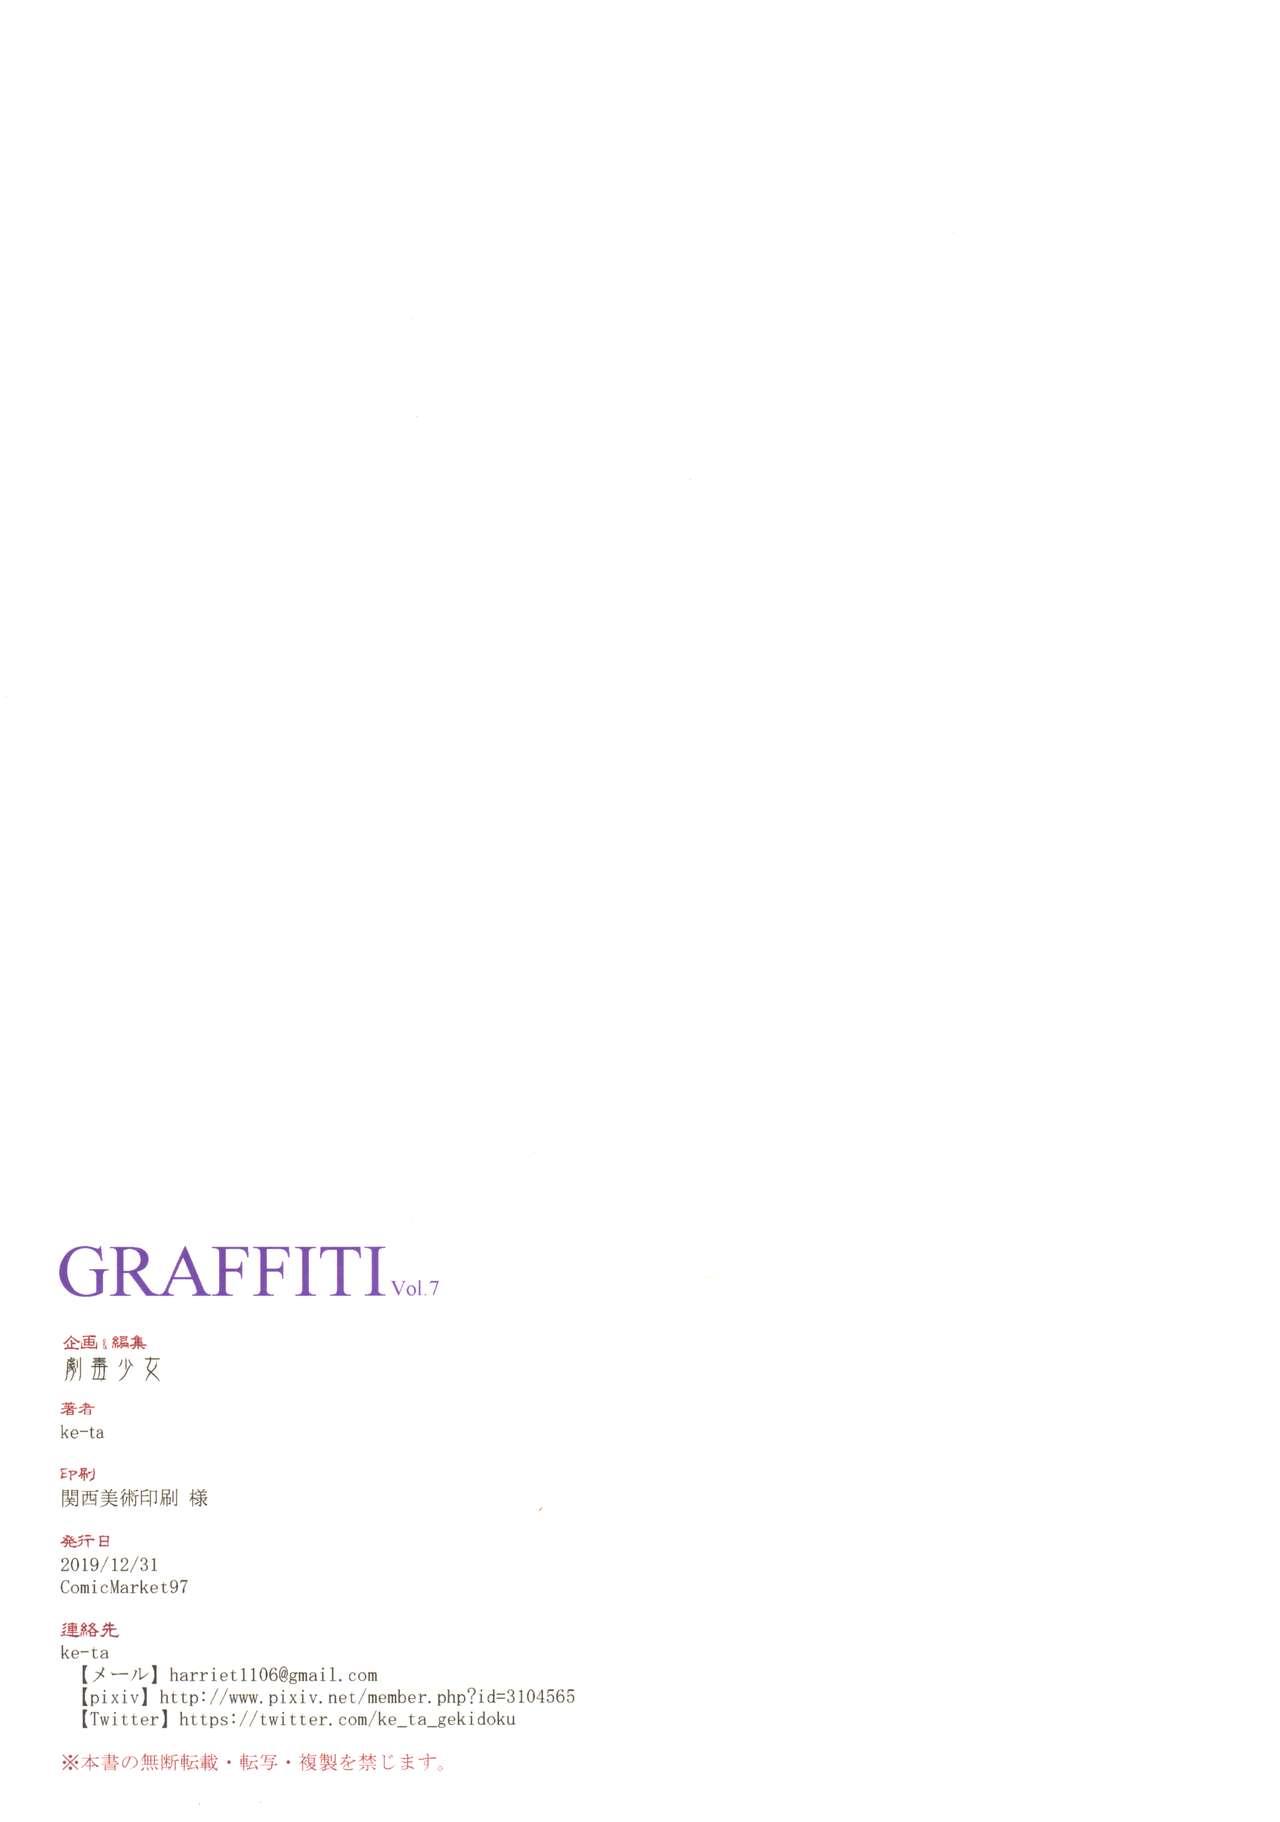 GRAFFITI Vol. 7 13